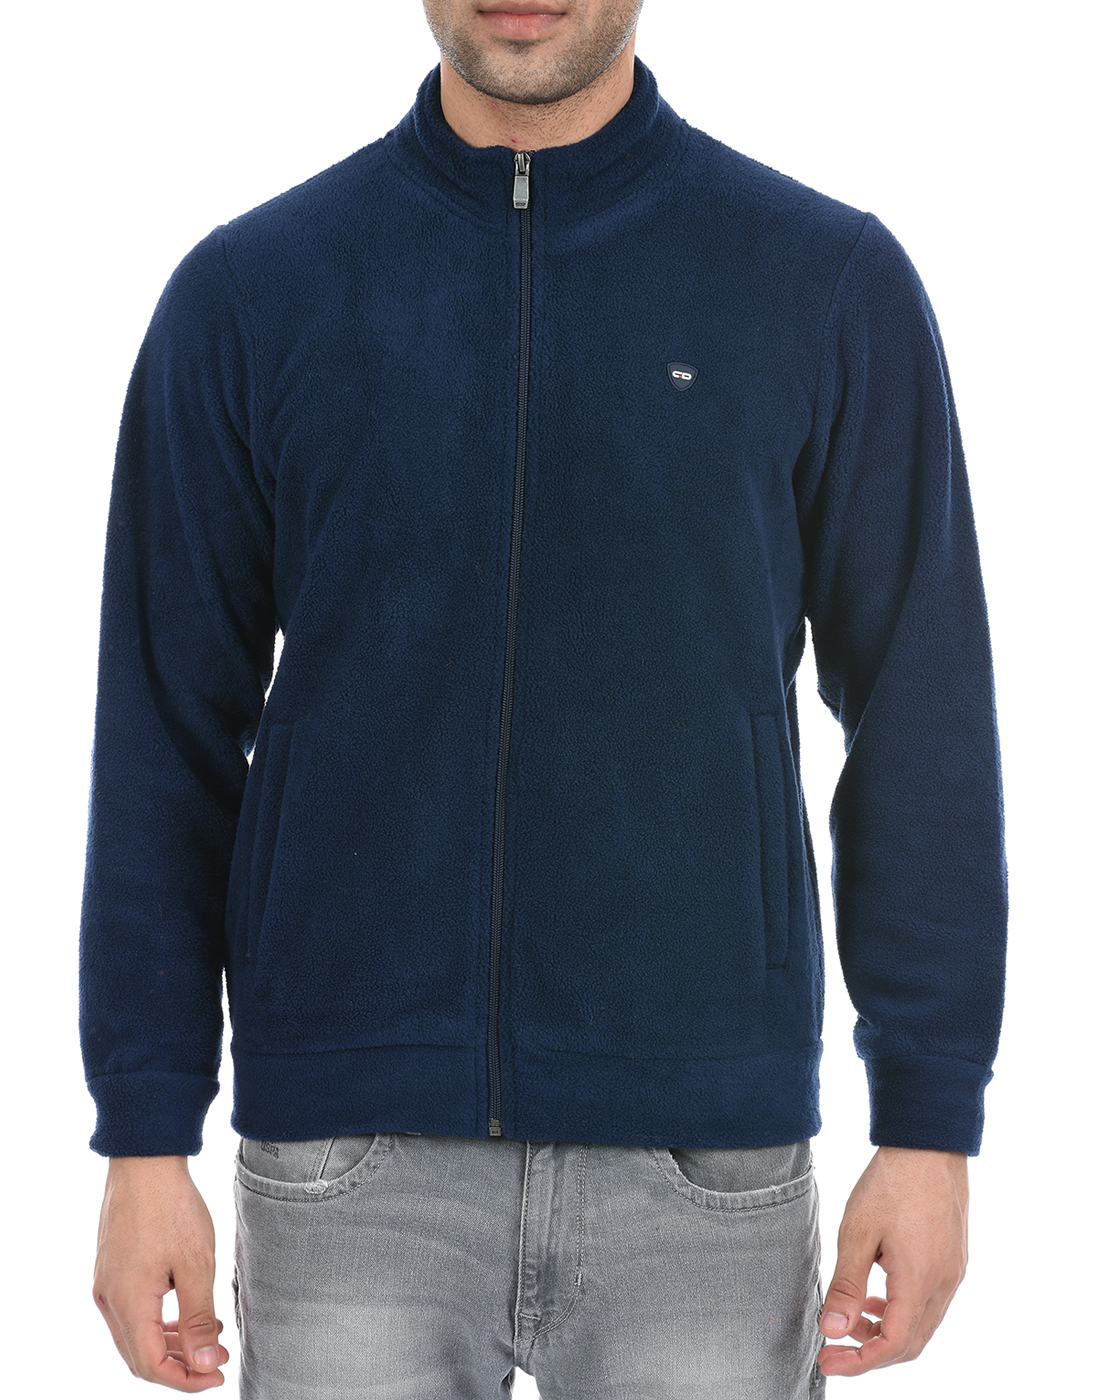 Cloak & Decker by Monte Carlo Men Solid Navy Sweatshirt